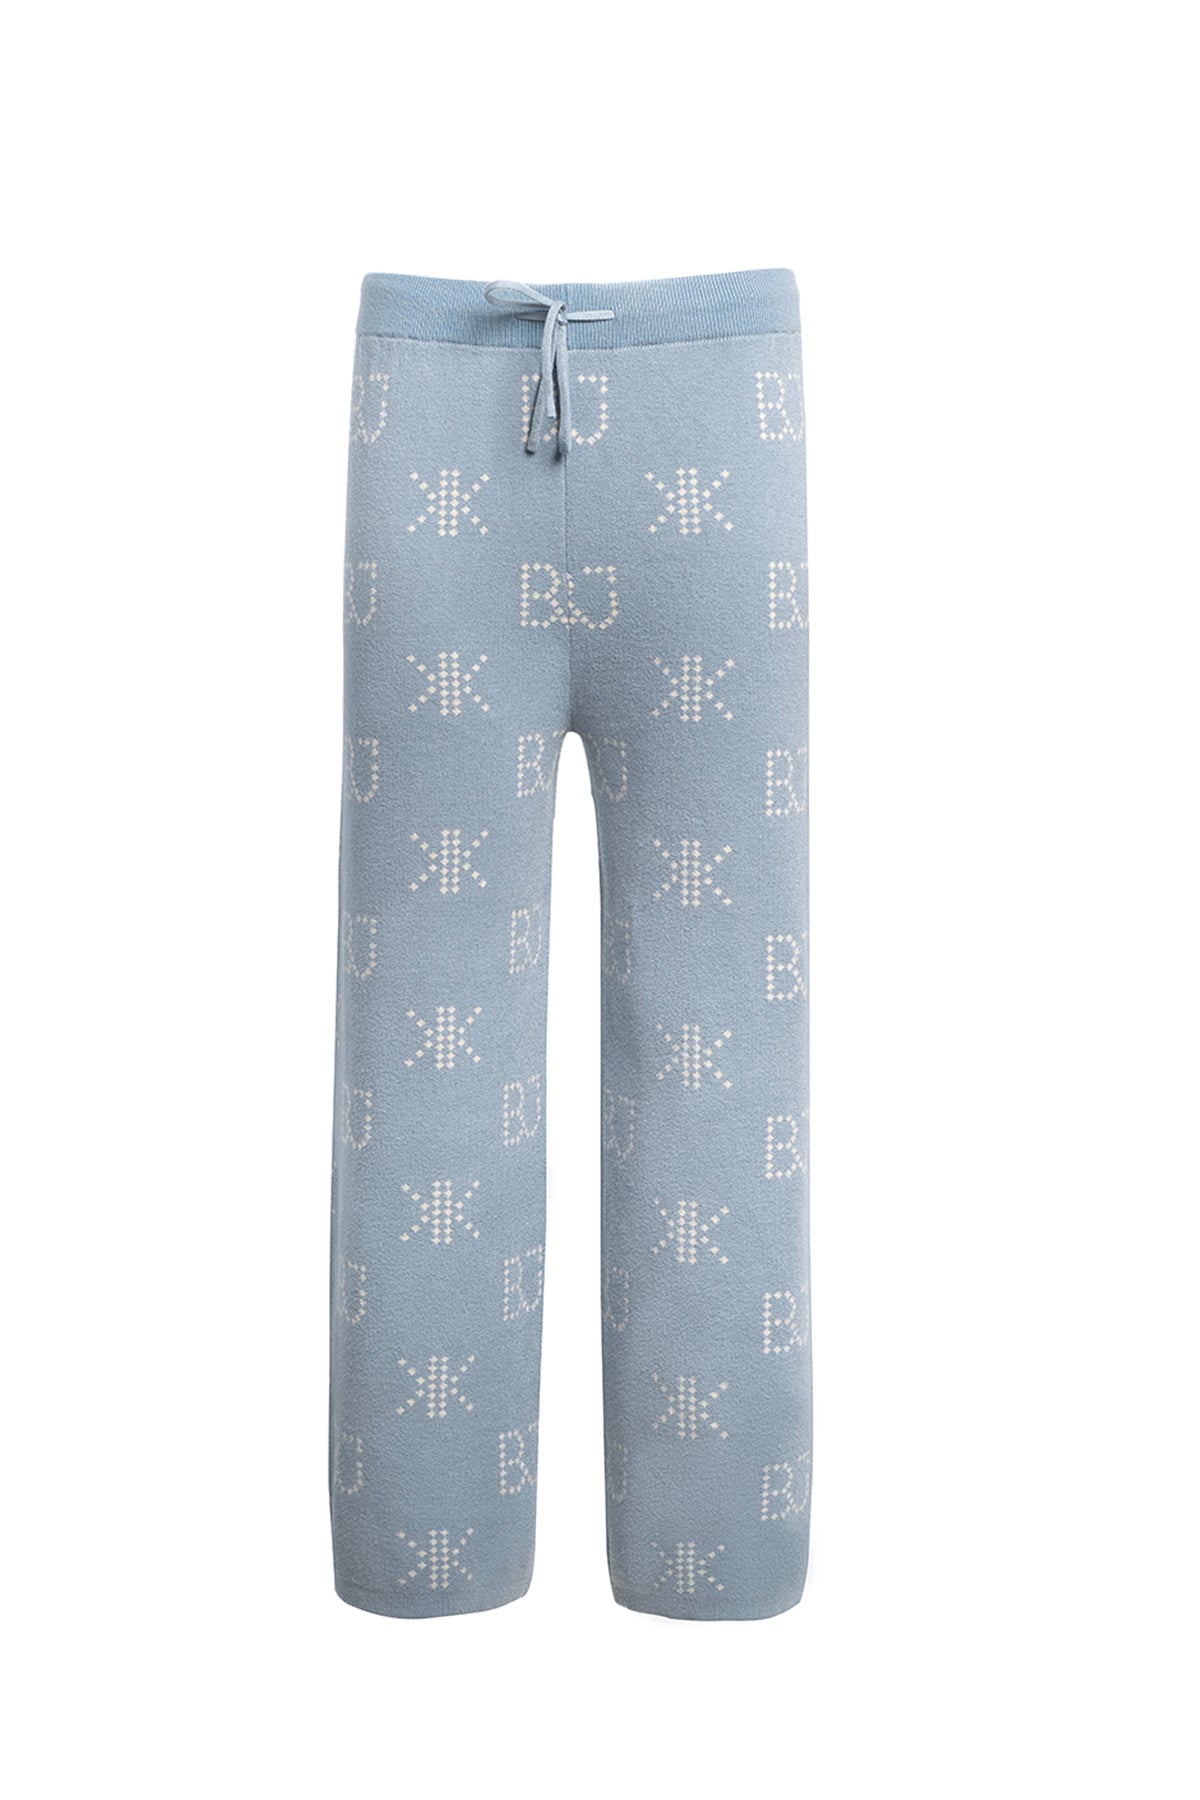 Khanum Knit Pants - Misty Blue